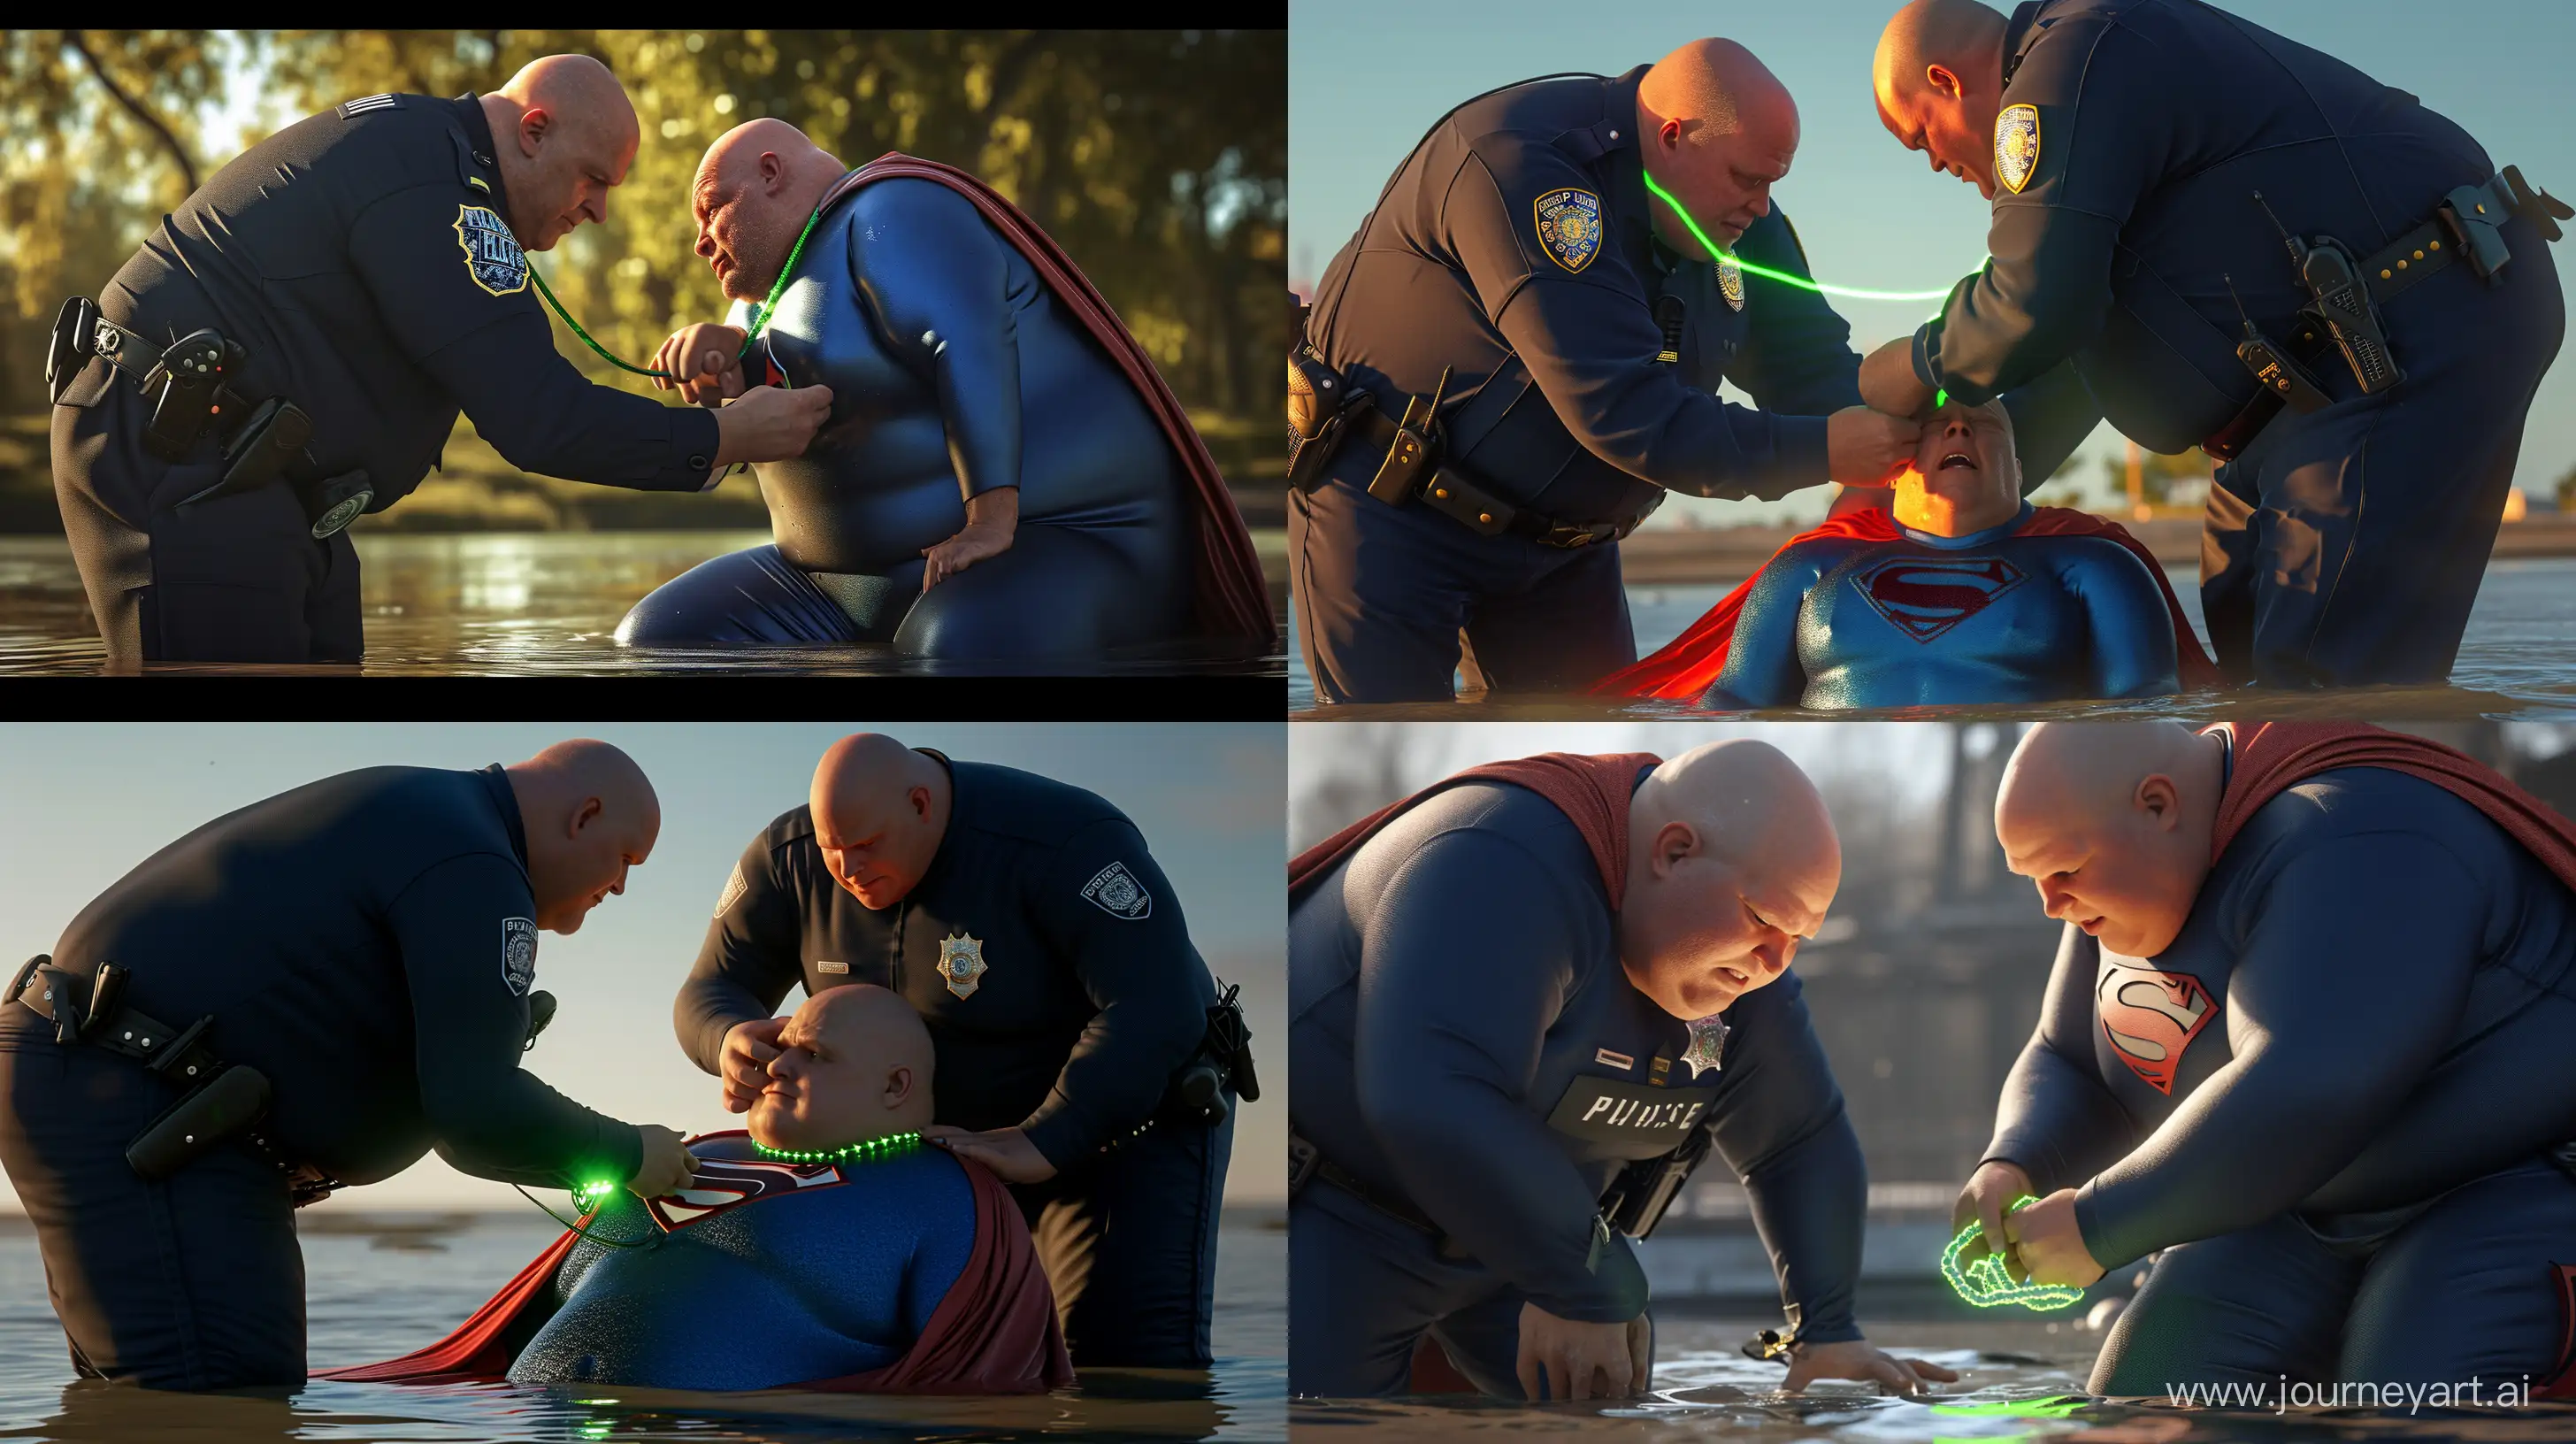 Senior-Policemen-Fastening-Glowing-Collar-on-WaterImmersed-Superman